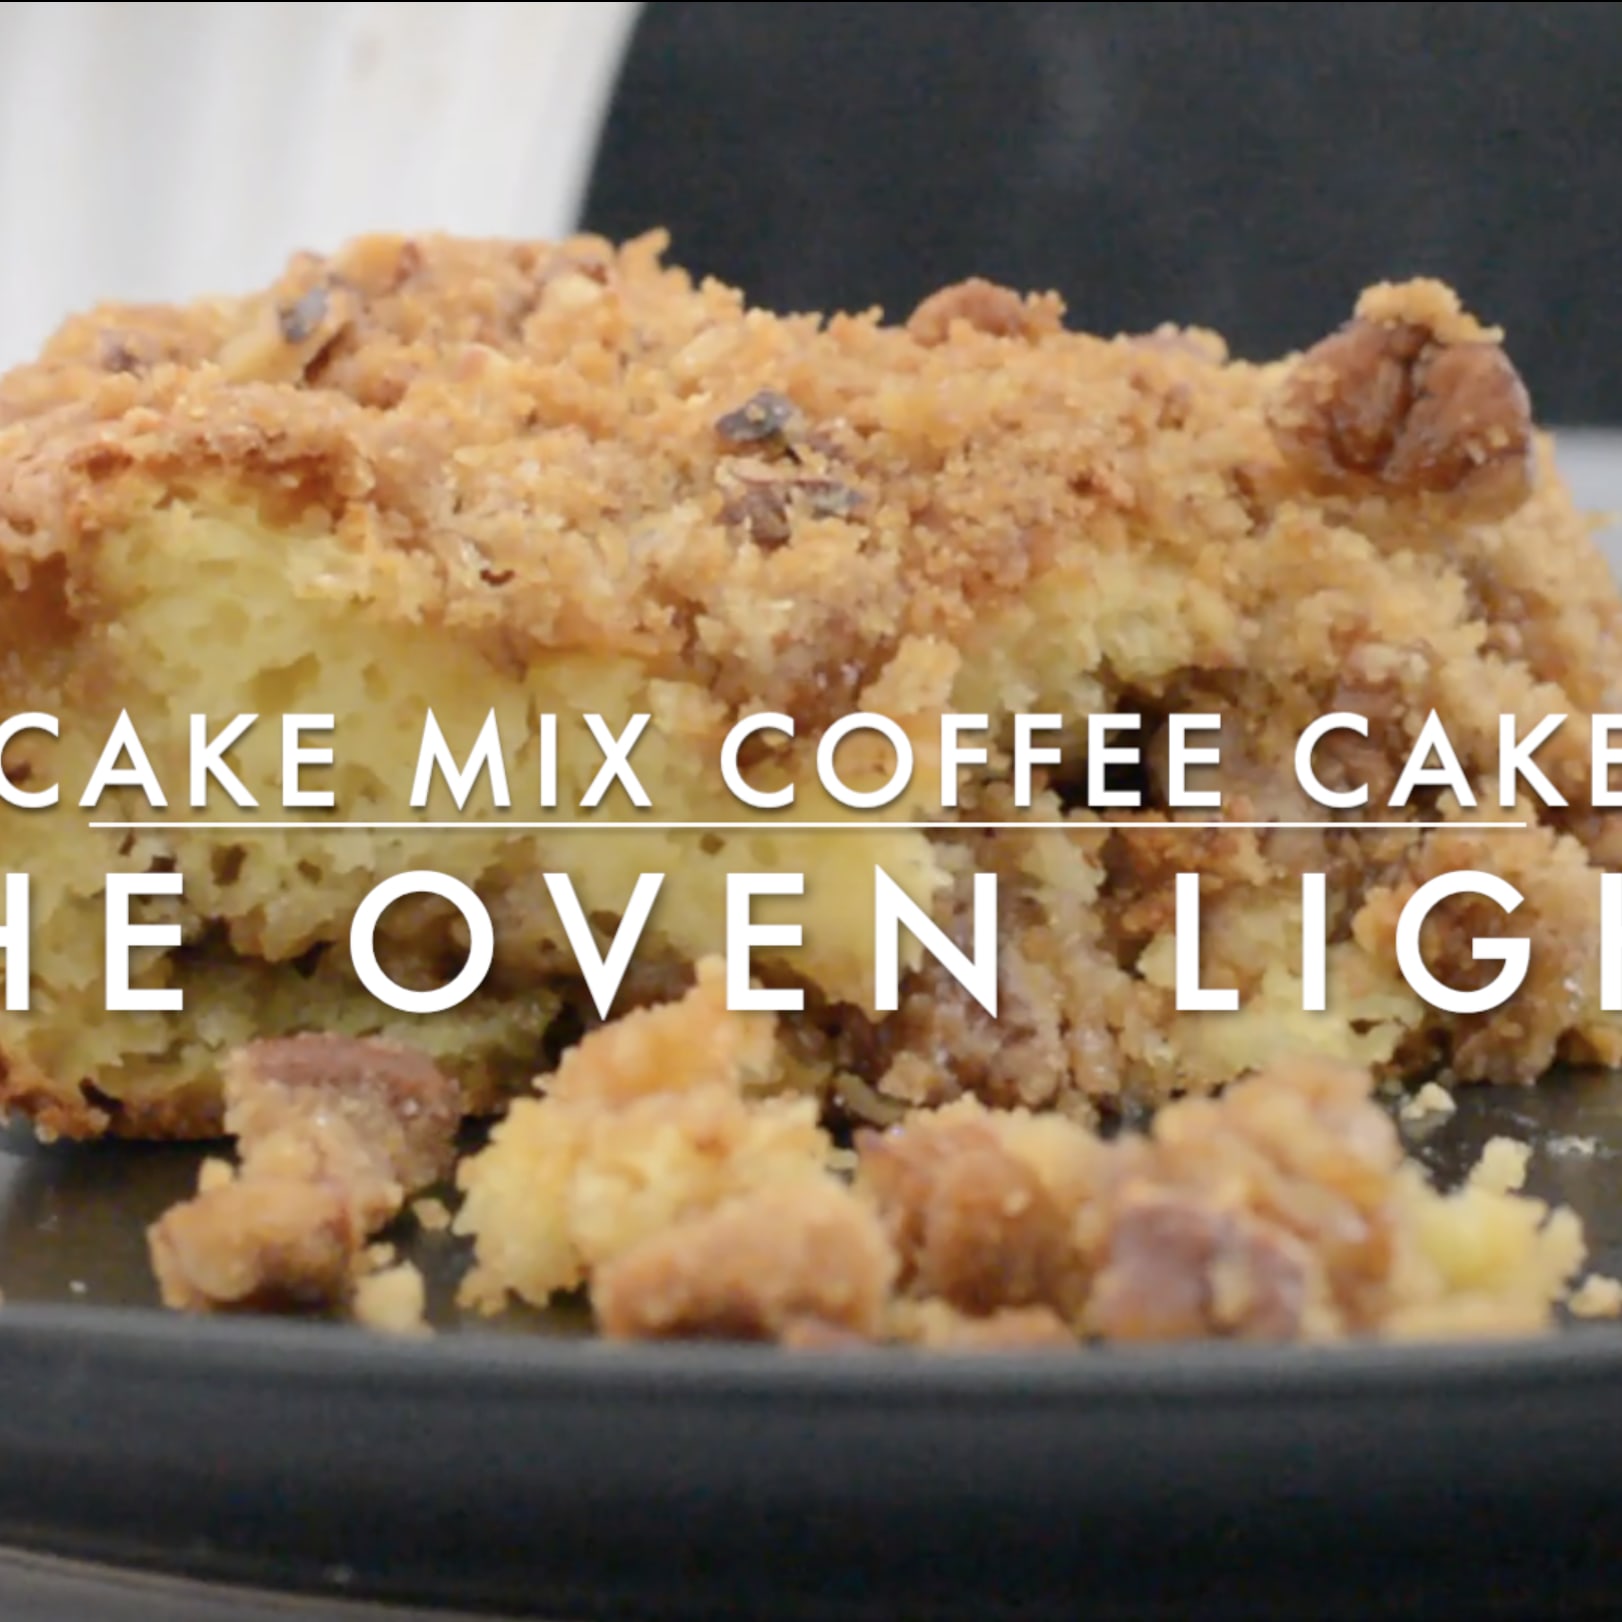 Box Mix Orange Chocolate Cake, The Oven Light